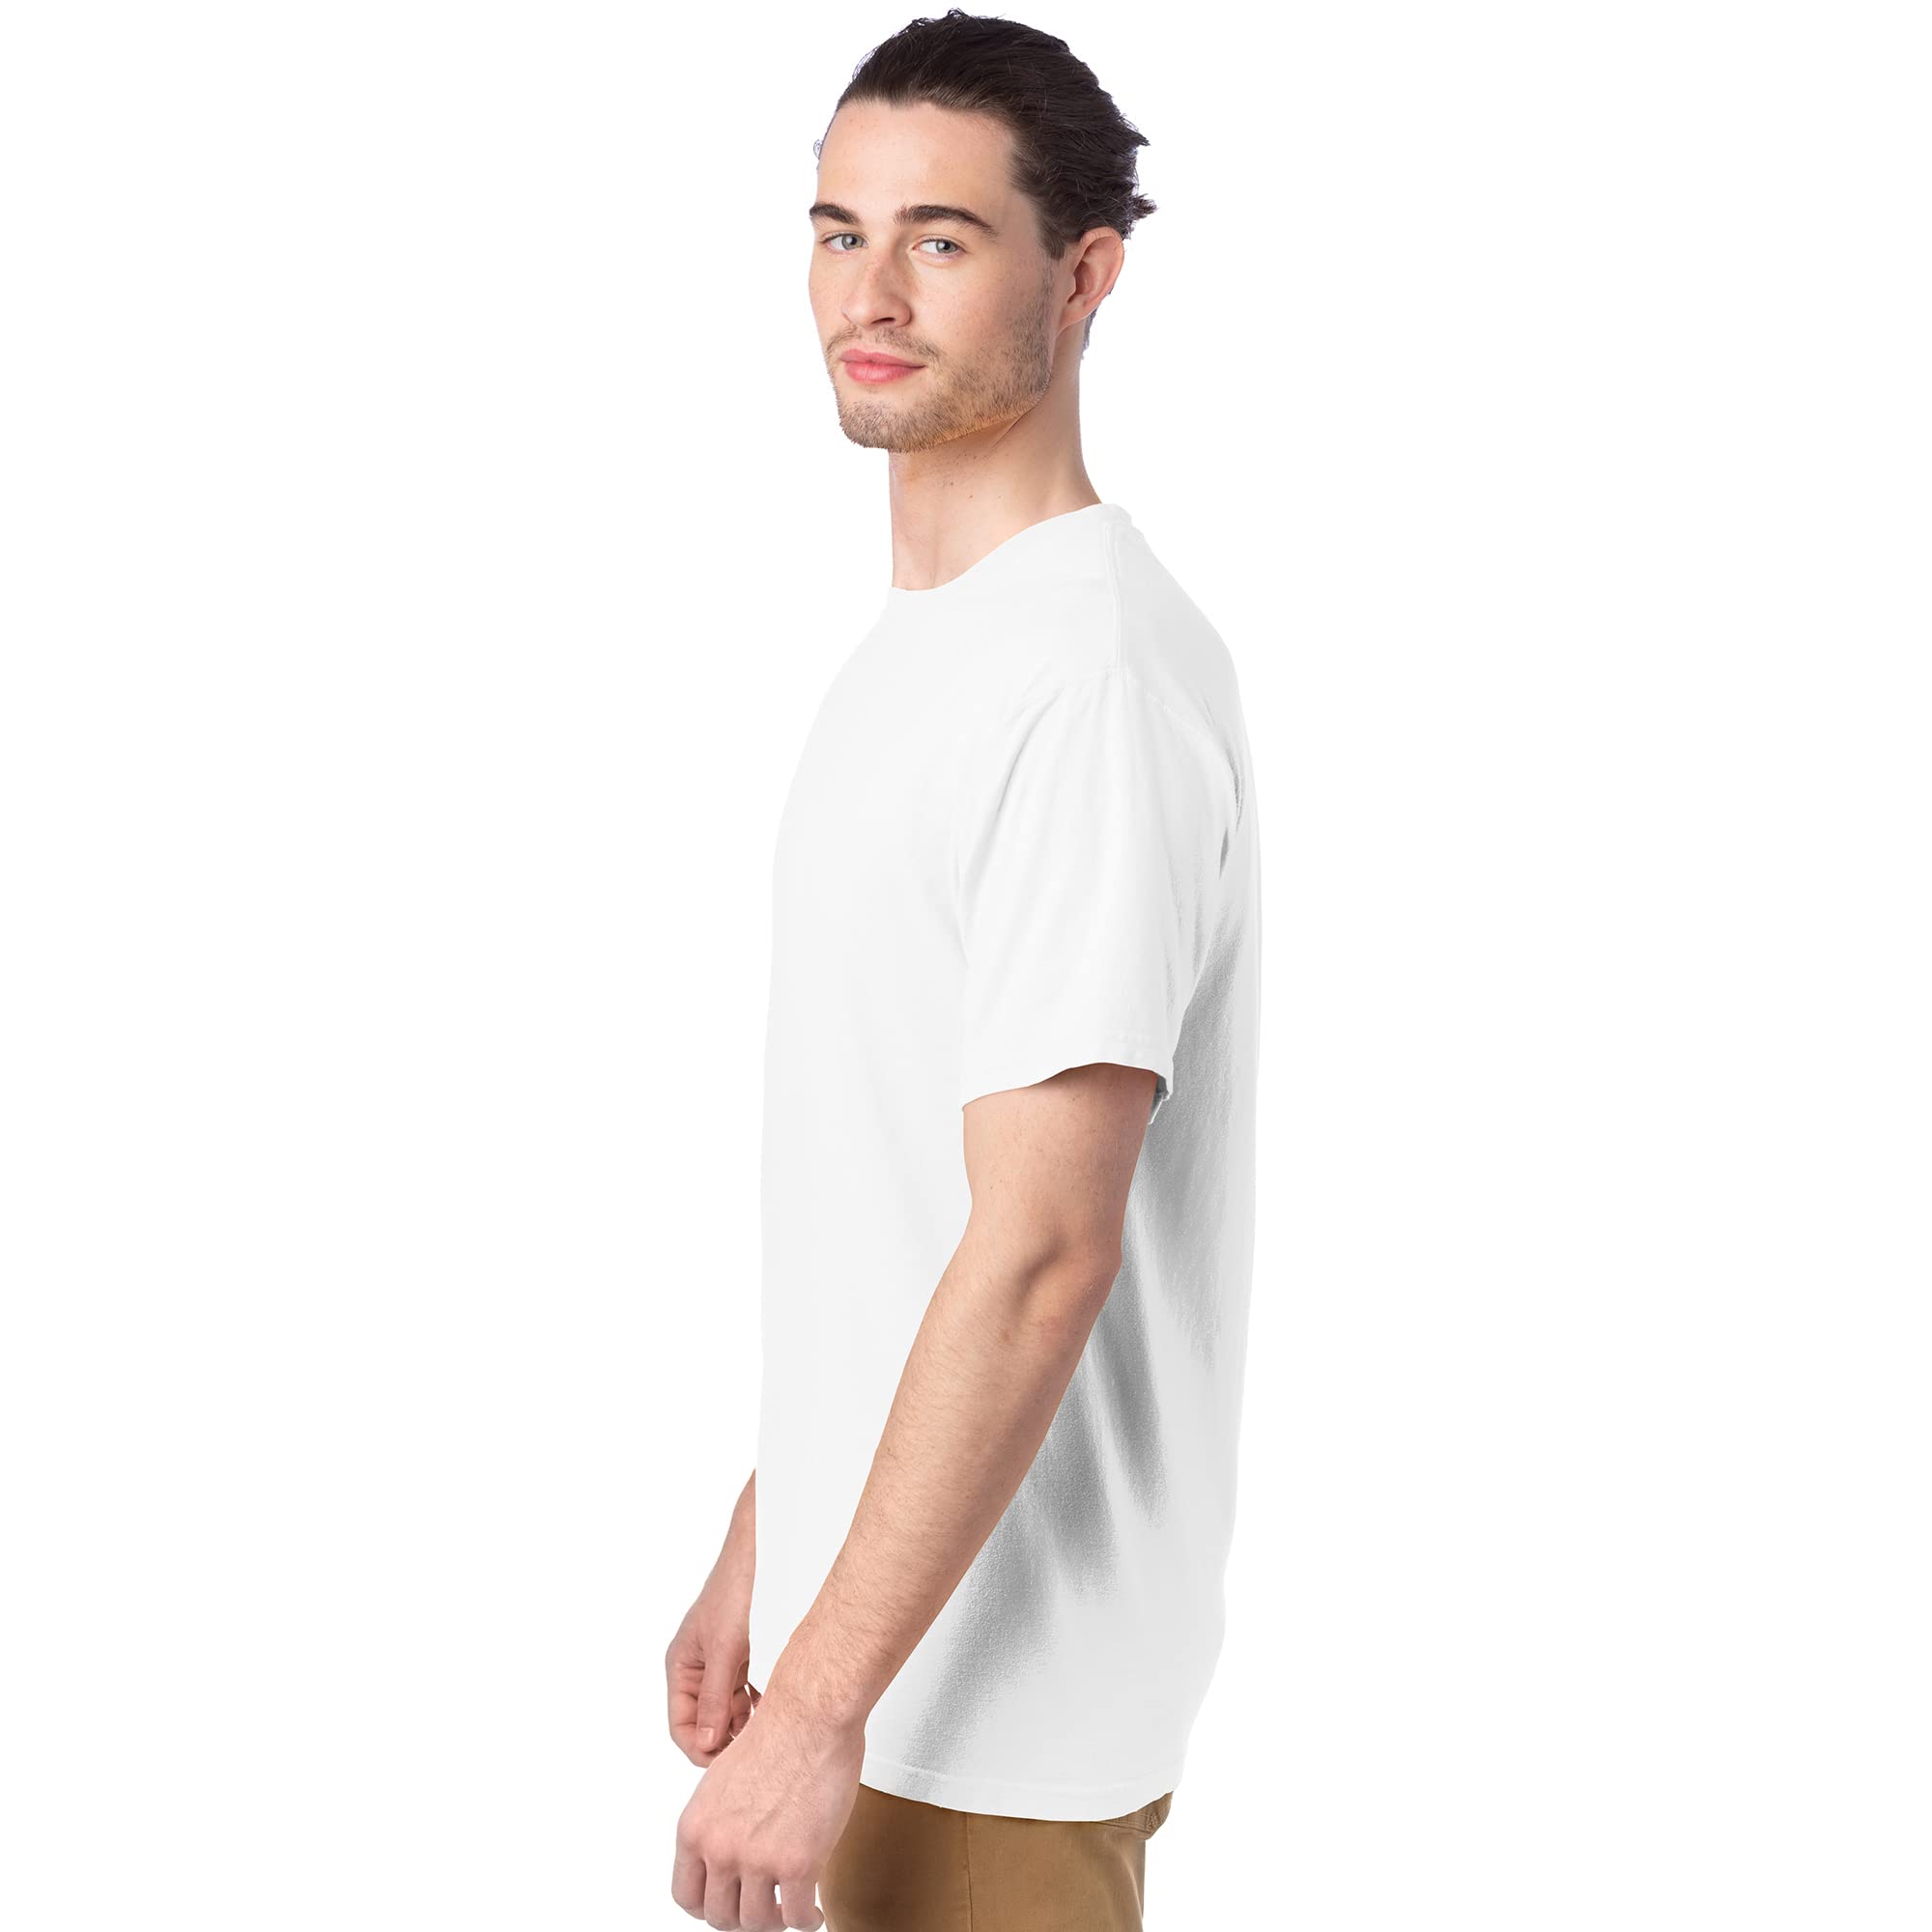 Hanes Originals Garment Dyed T-Shirt, 100% Cotton Men, Vintage Washed Tee